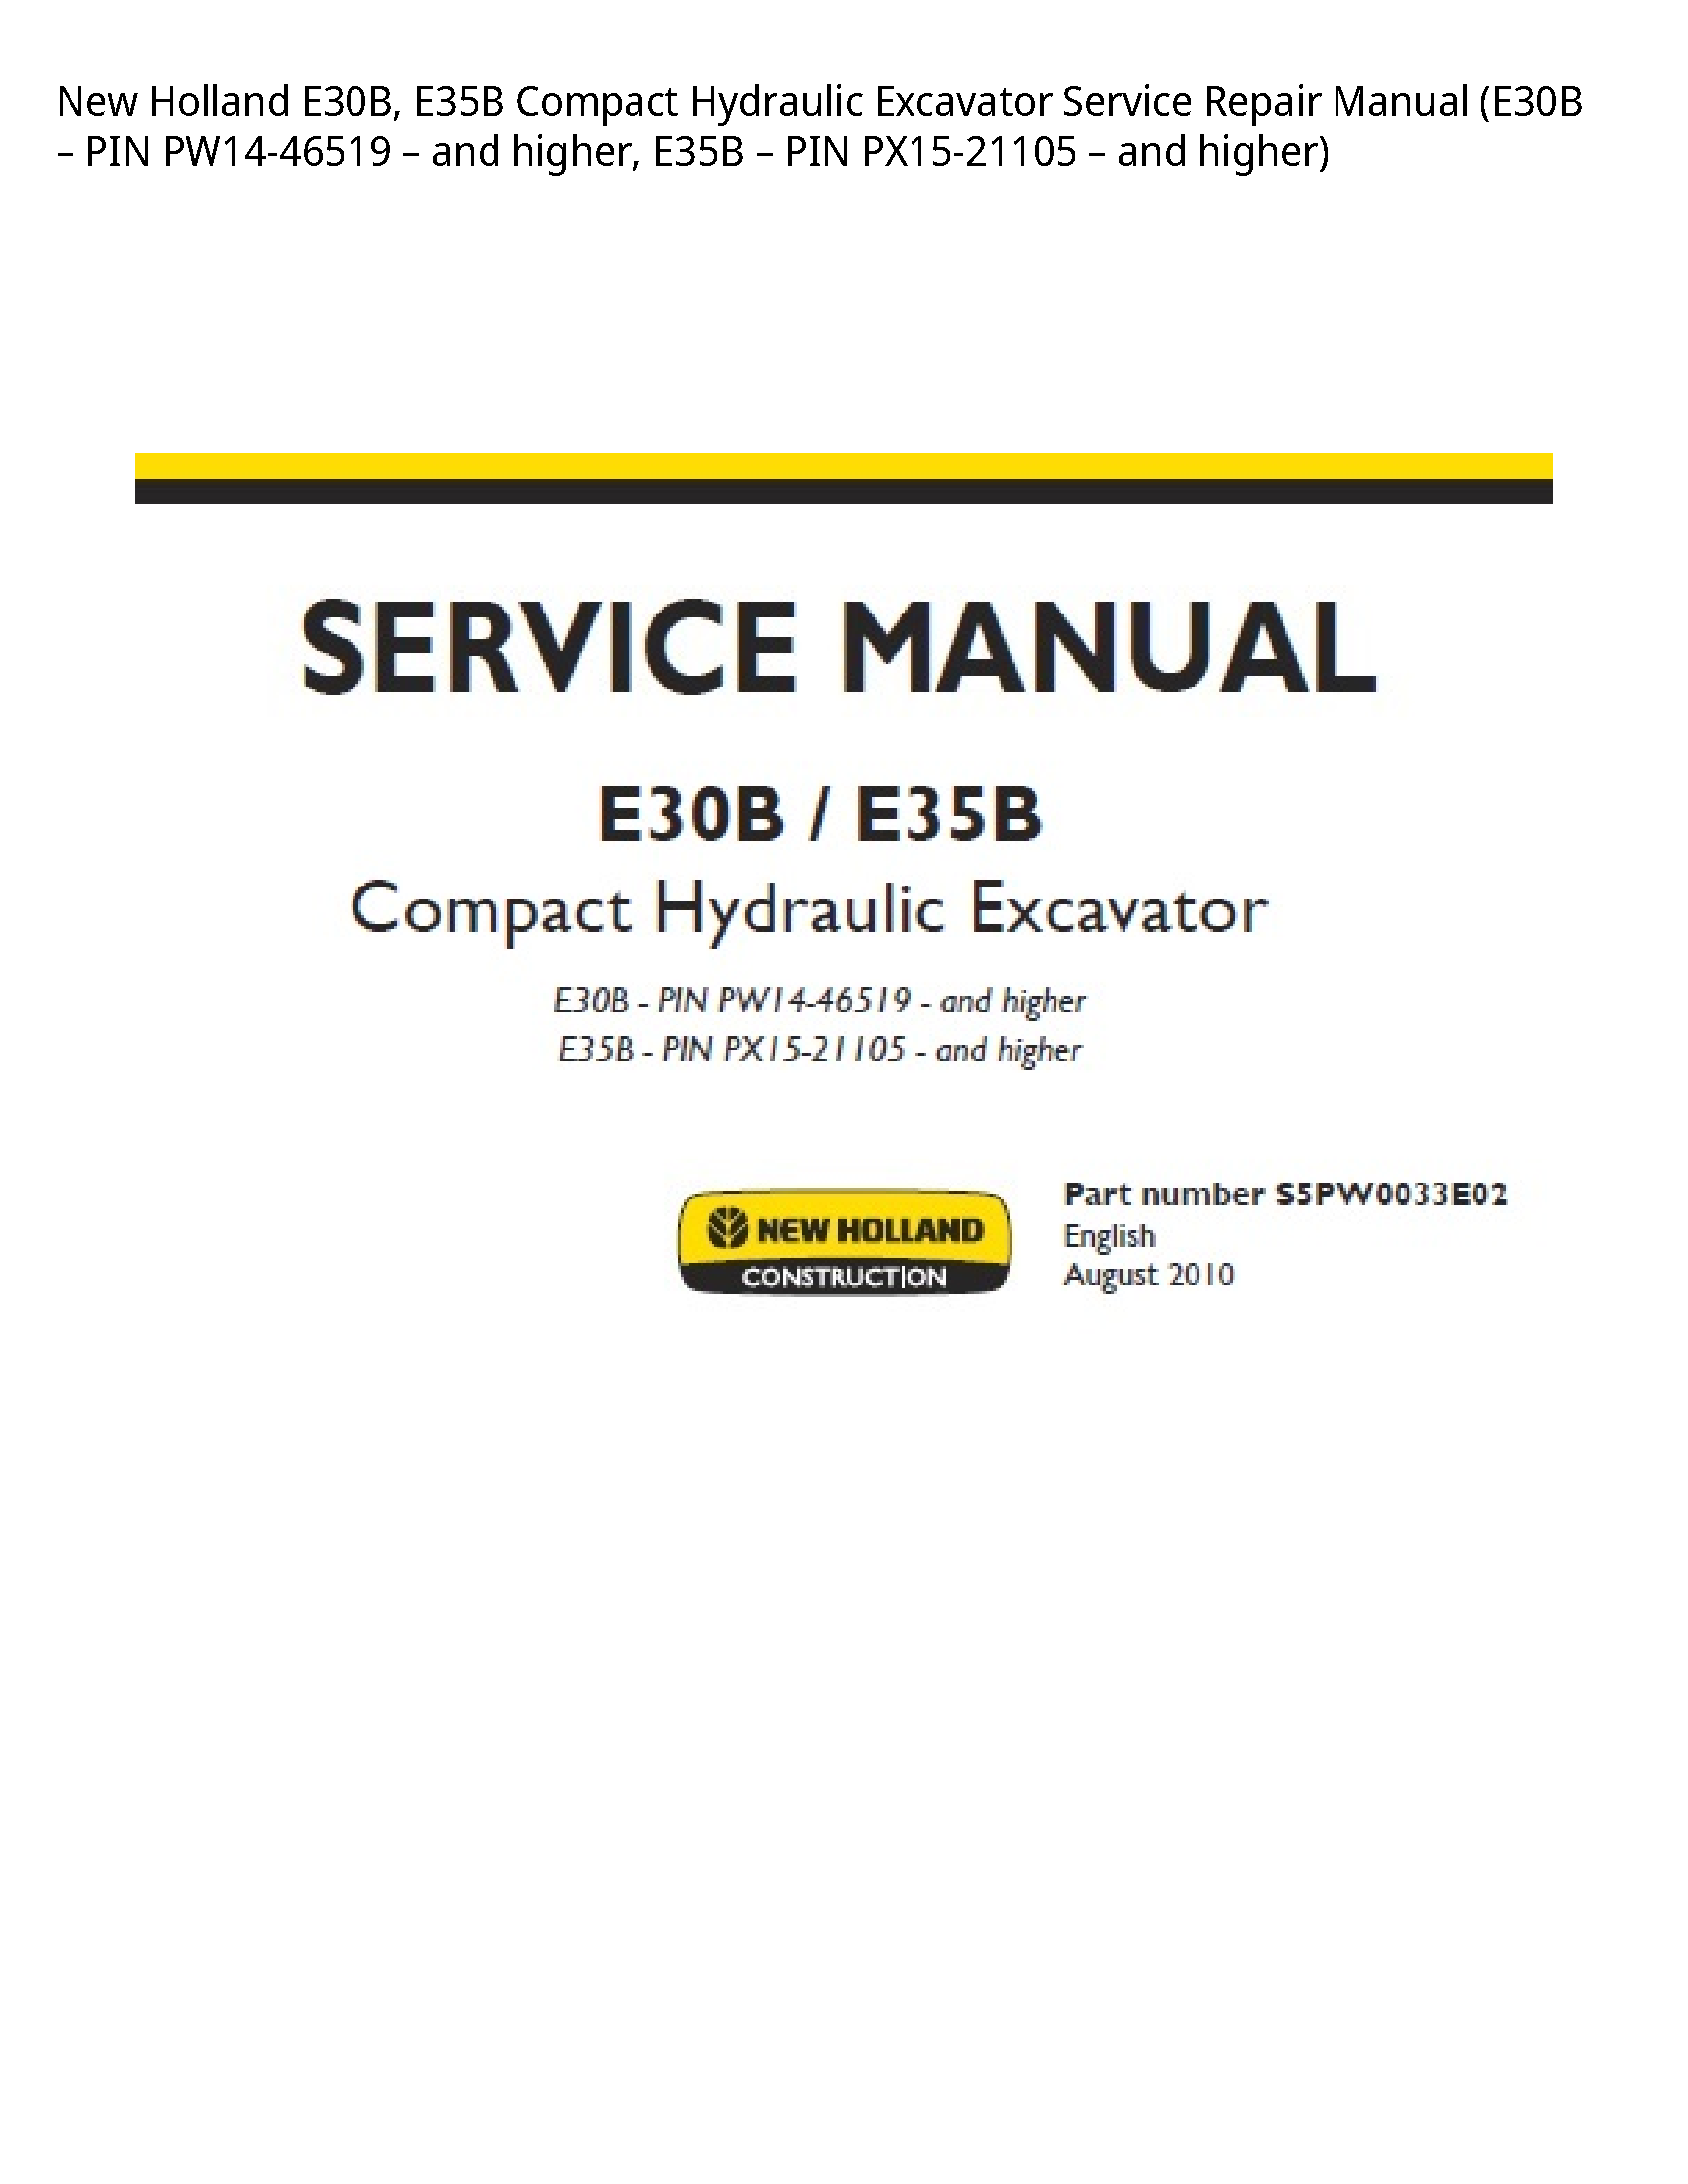 New Holland E30B Compact Hydraulic Excavator manual